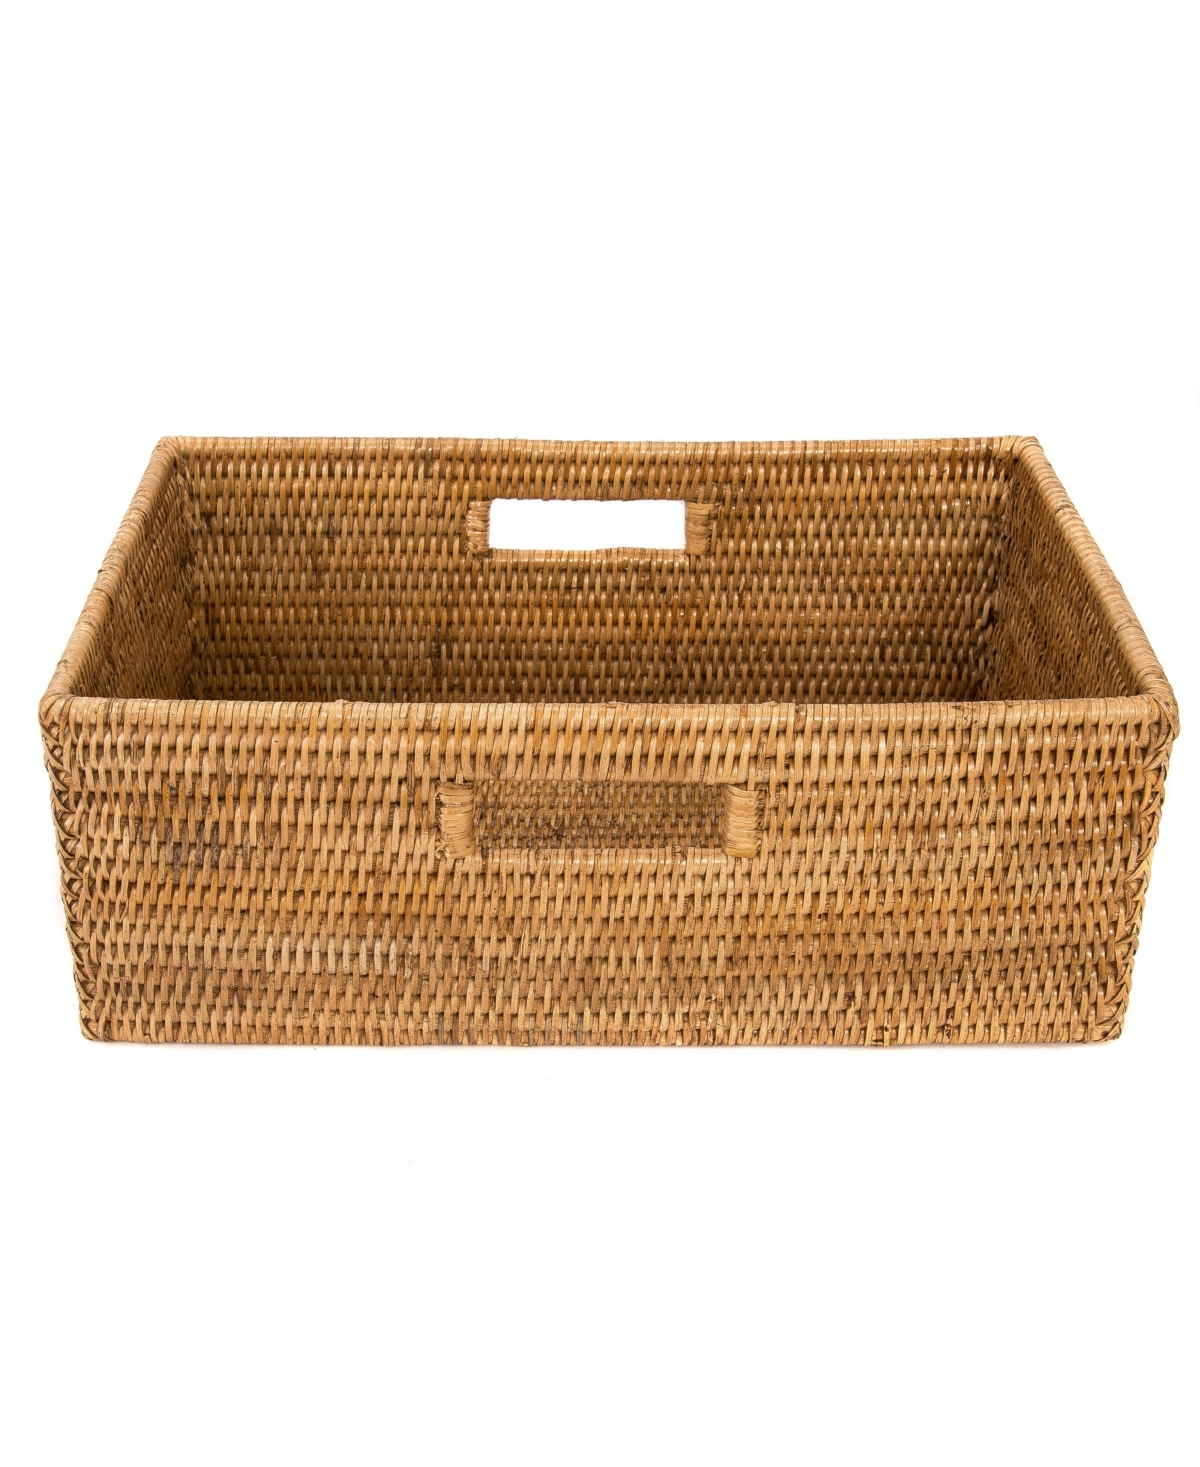 Artifacts Trading Company Artifacts Rattan Rectangular Shelf Basket In Honey Brown